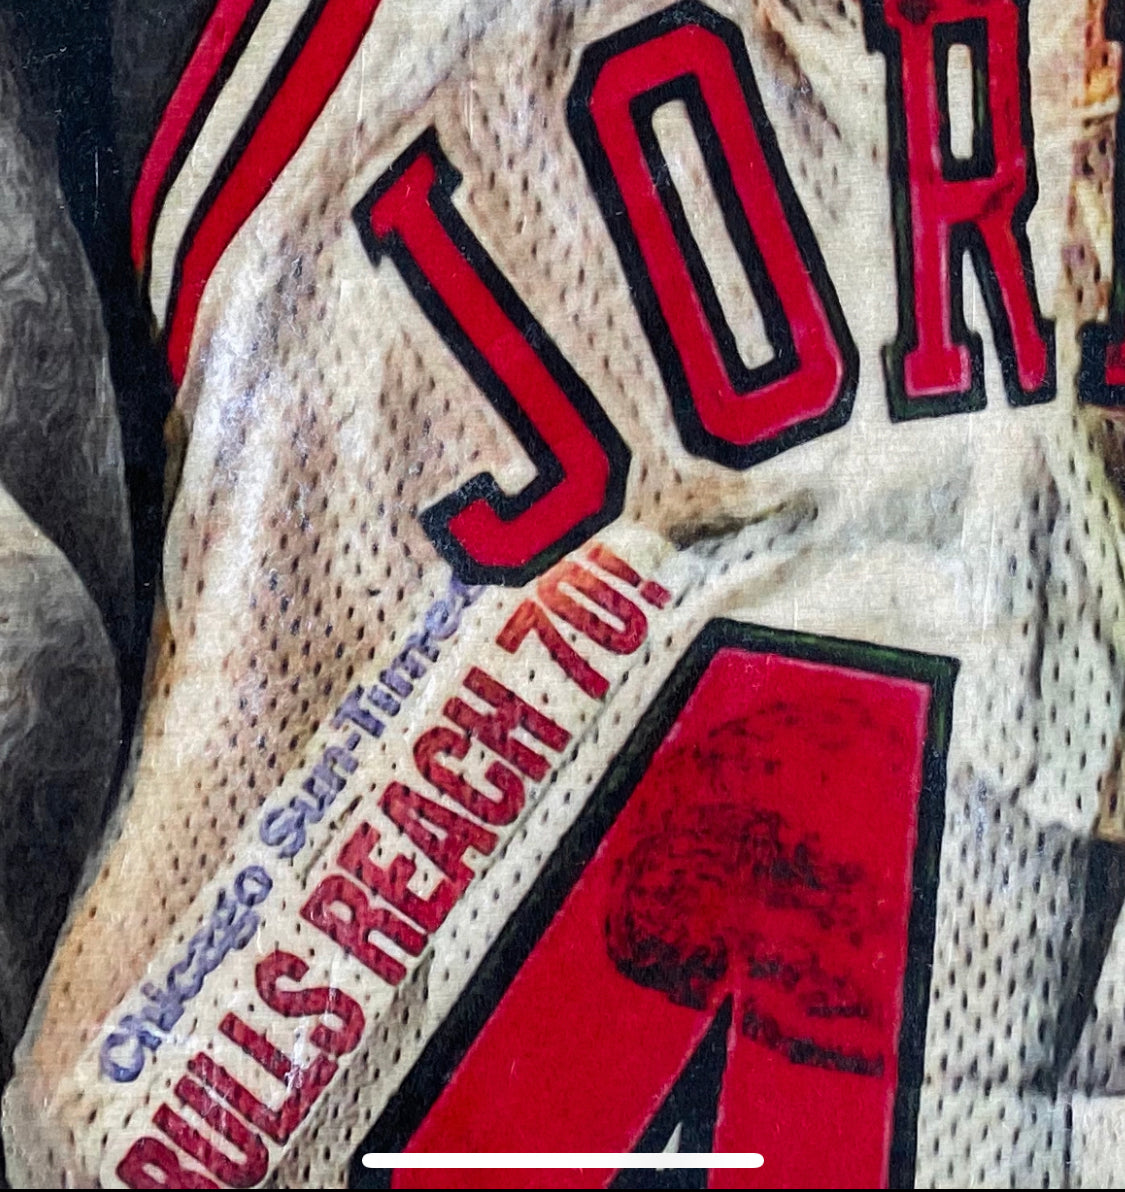 Chicago Bulls Michael Jordan 1995/96 Red Champion Jersey - The